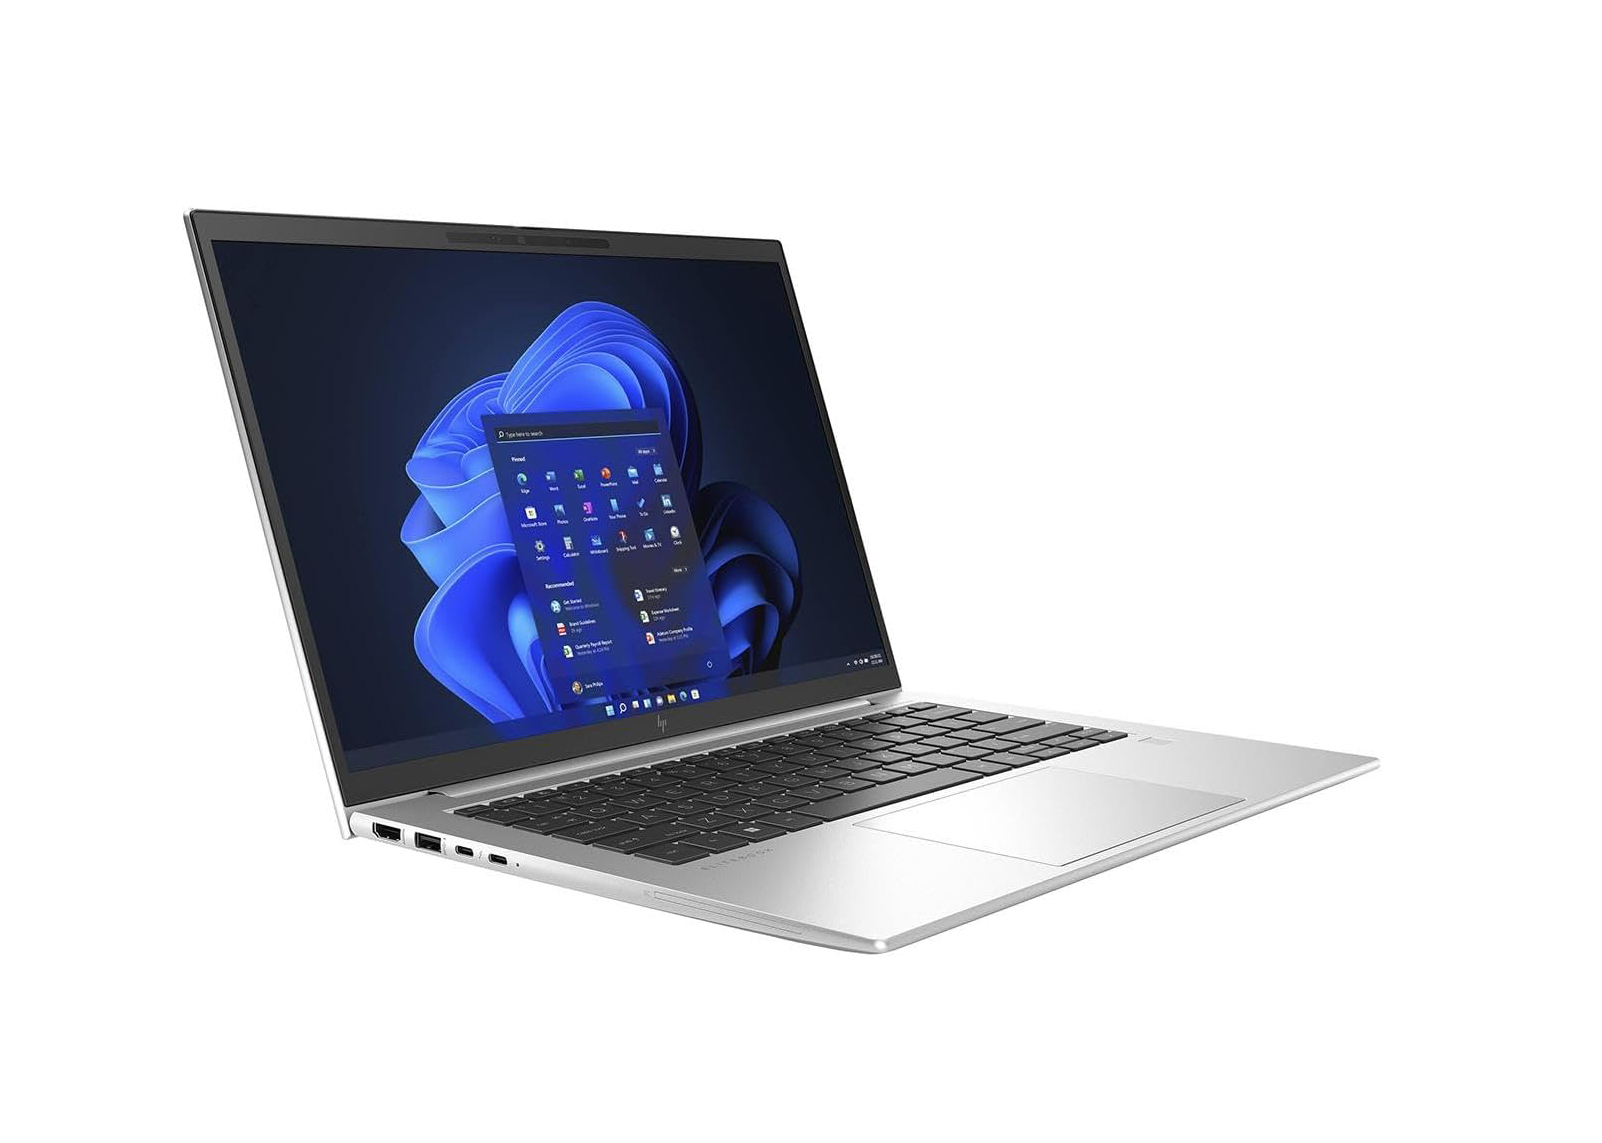  خرید،قیمت و مشخصات لپ تاپ HP EliteBook 1040 G9 | لاکچری لپ تاپ 